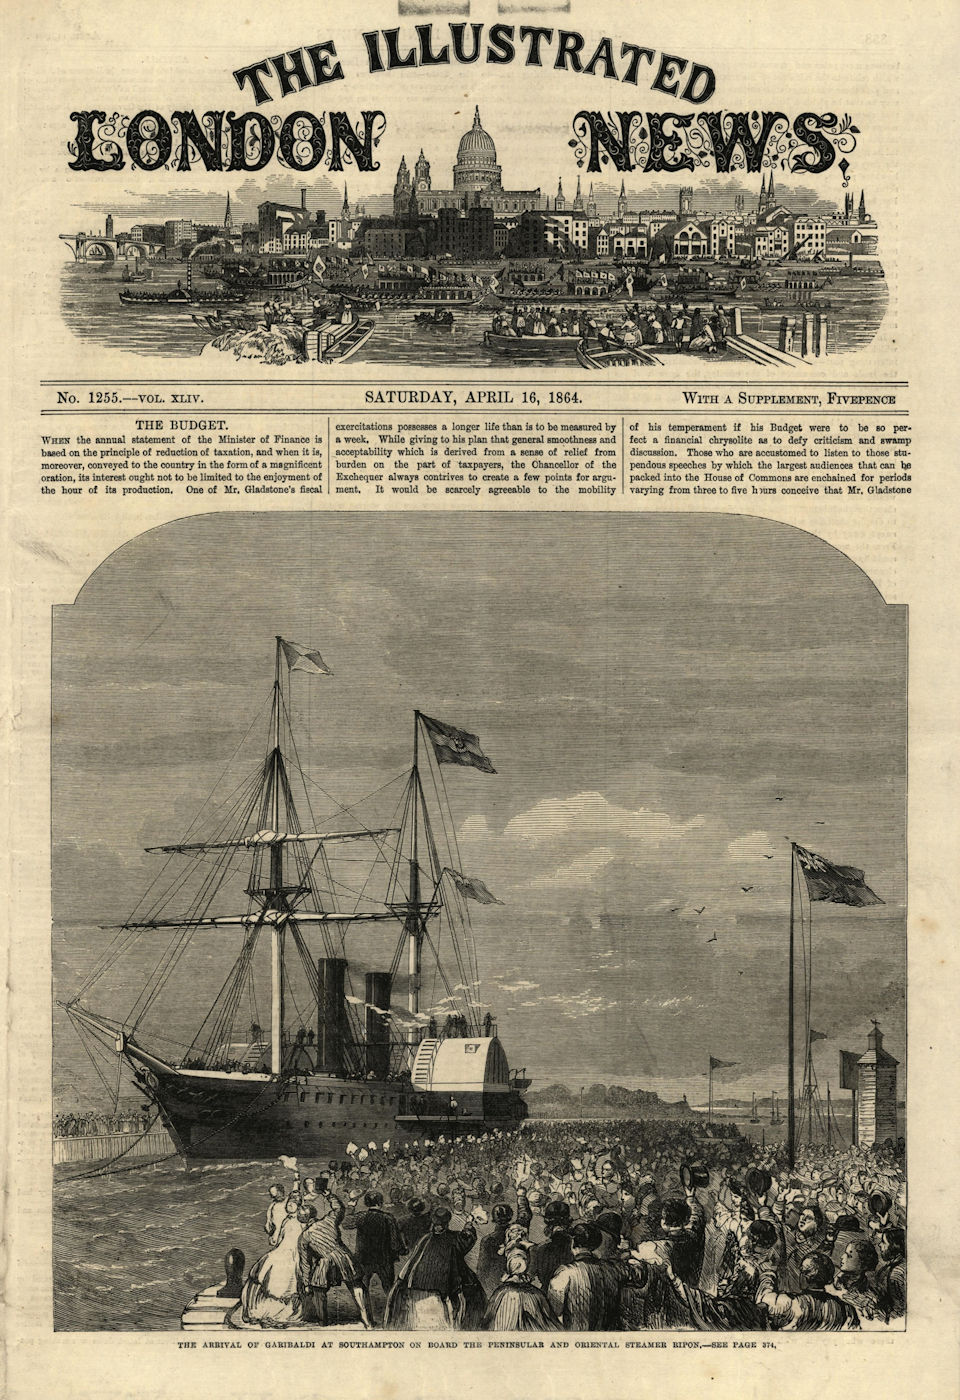 Garibaldi's arrival, Southampton on the Peninsular & Oriental steamer Ripon 1864